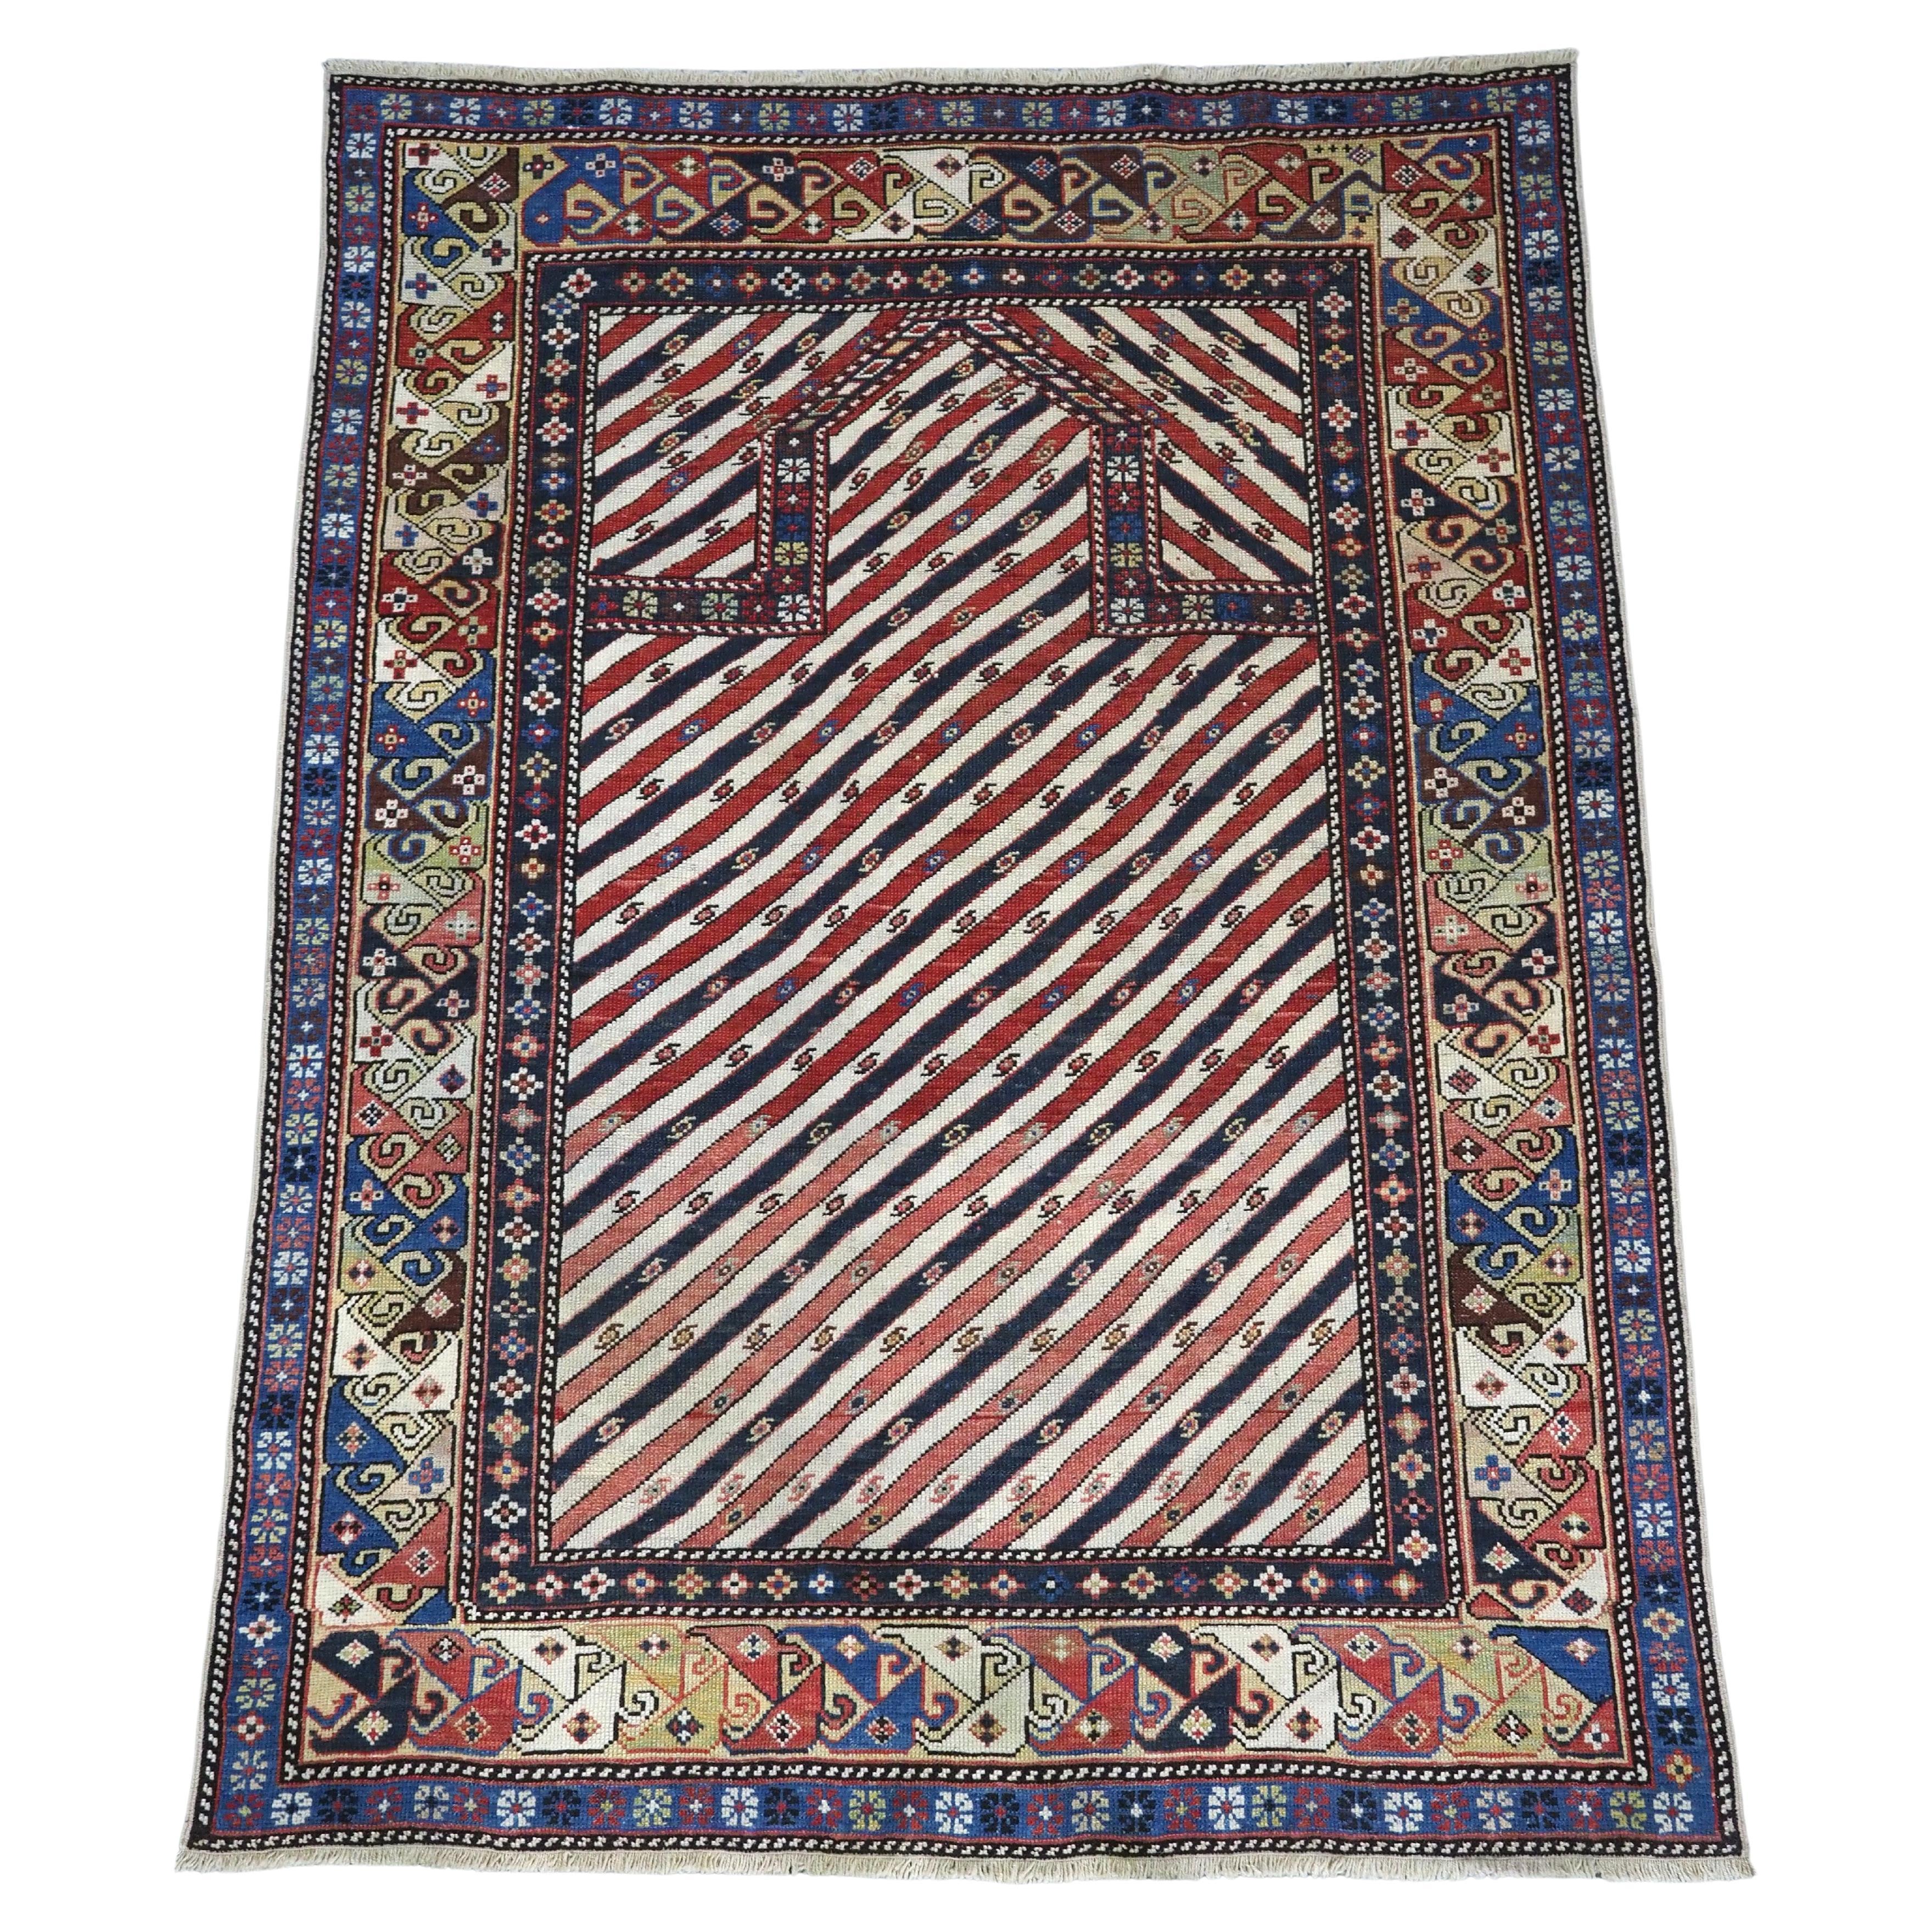 Antique Caucasian Shirvan/Dagestan prayer rug with scarce diagonal stipe design.